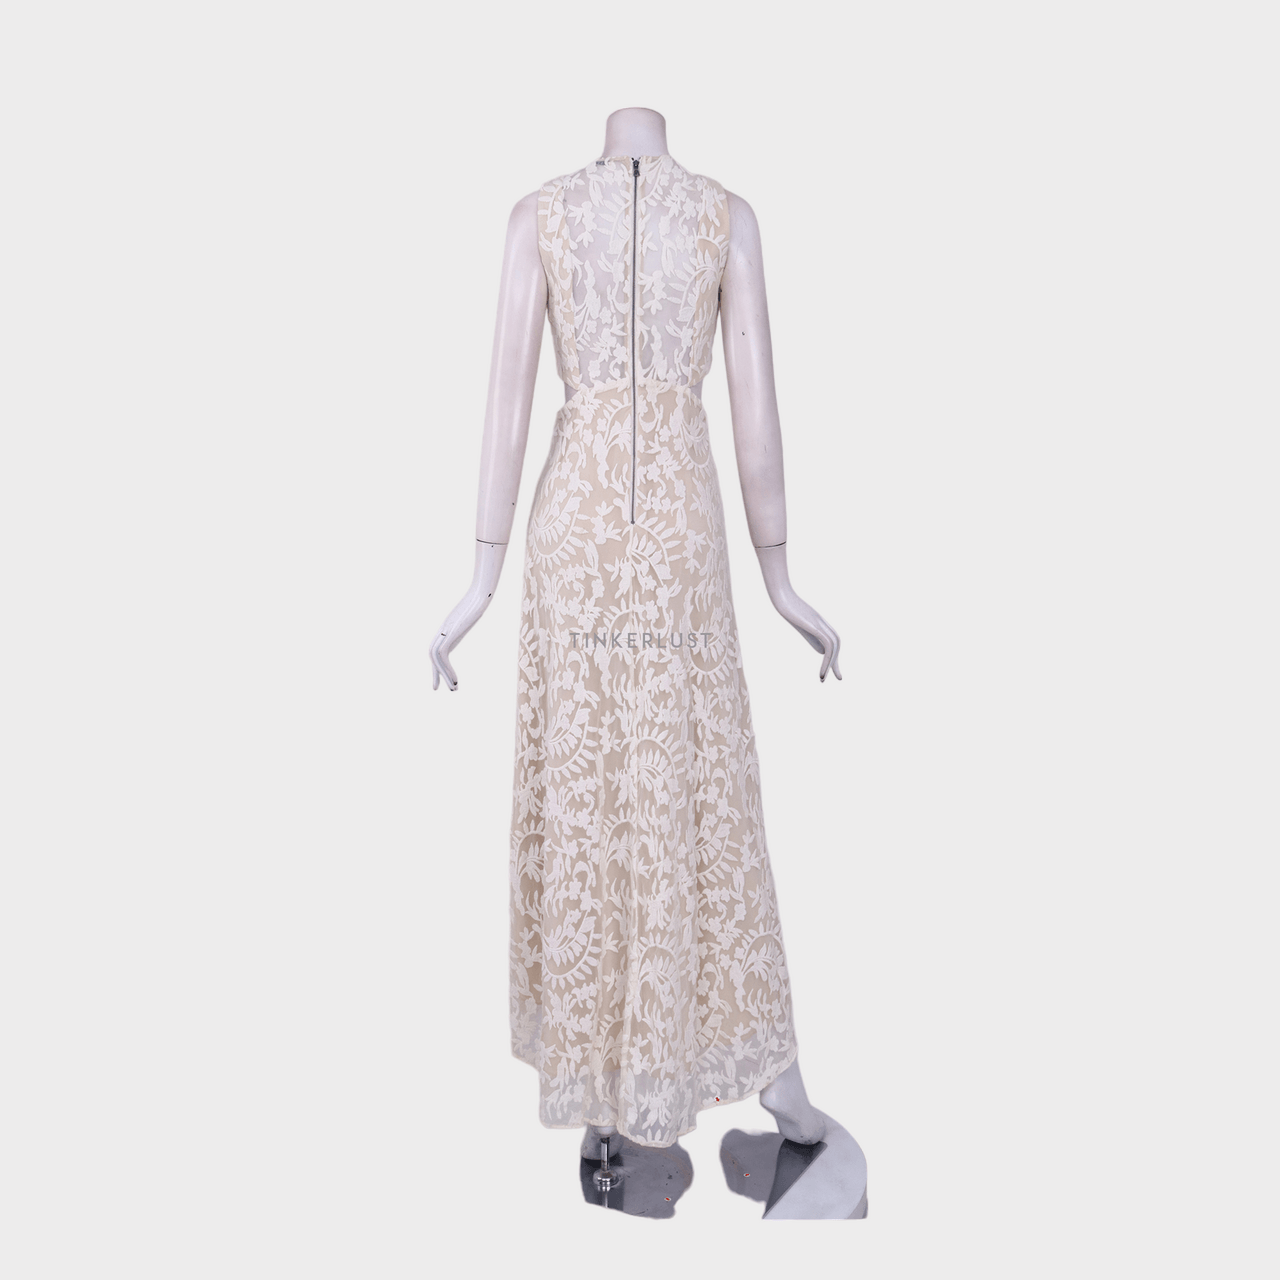 Alice + Olivia Juelia Cutout Embroidered Tulle White Long Dress